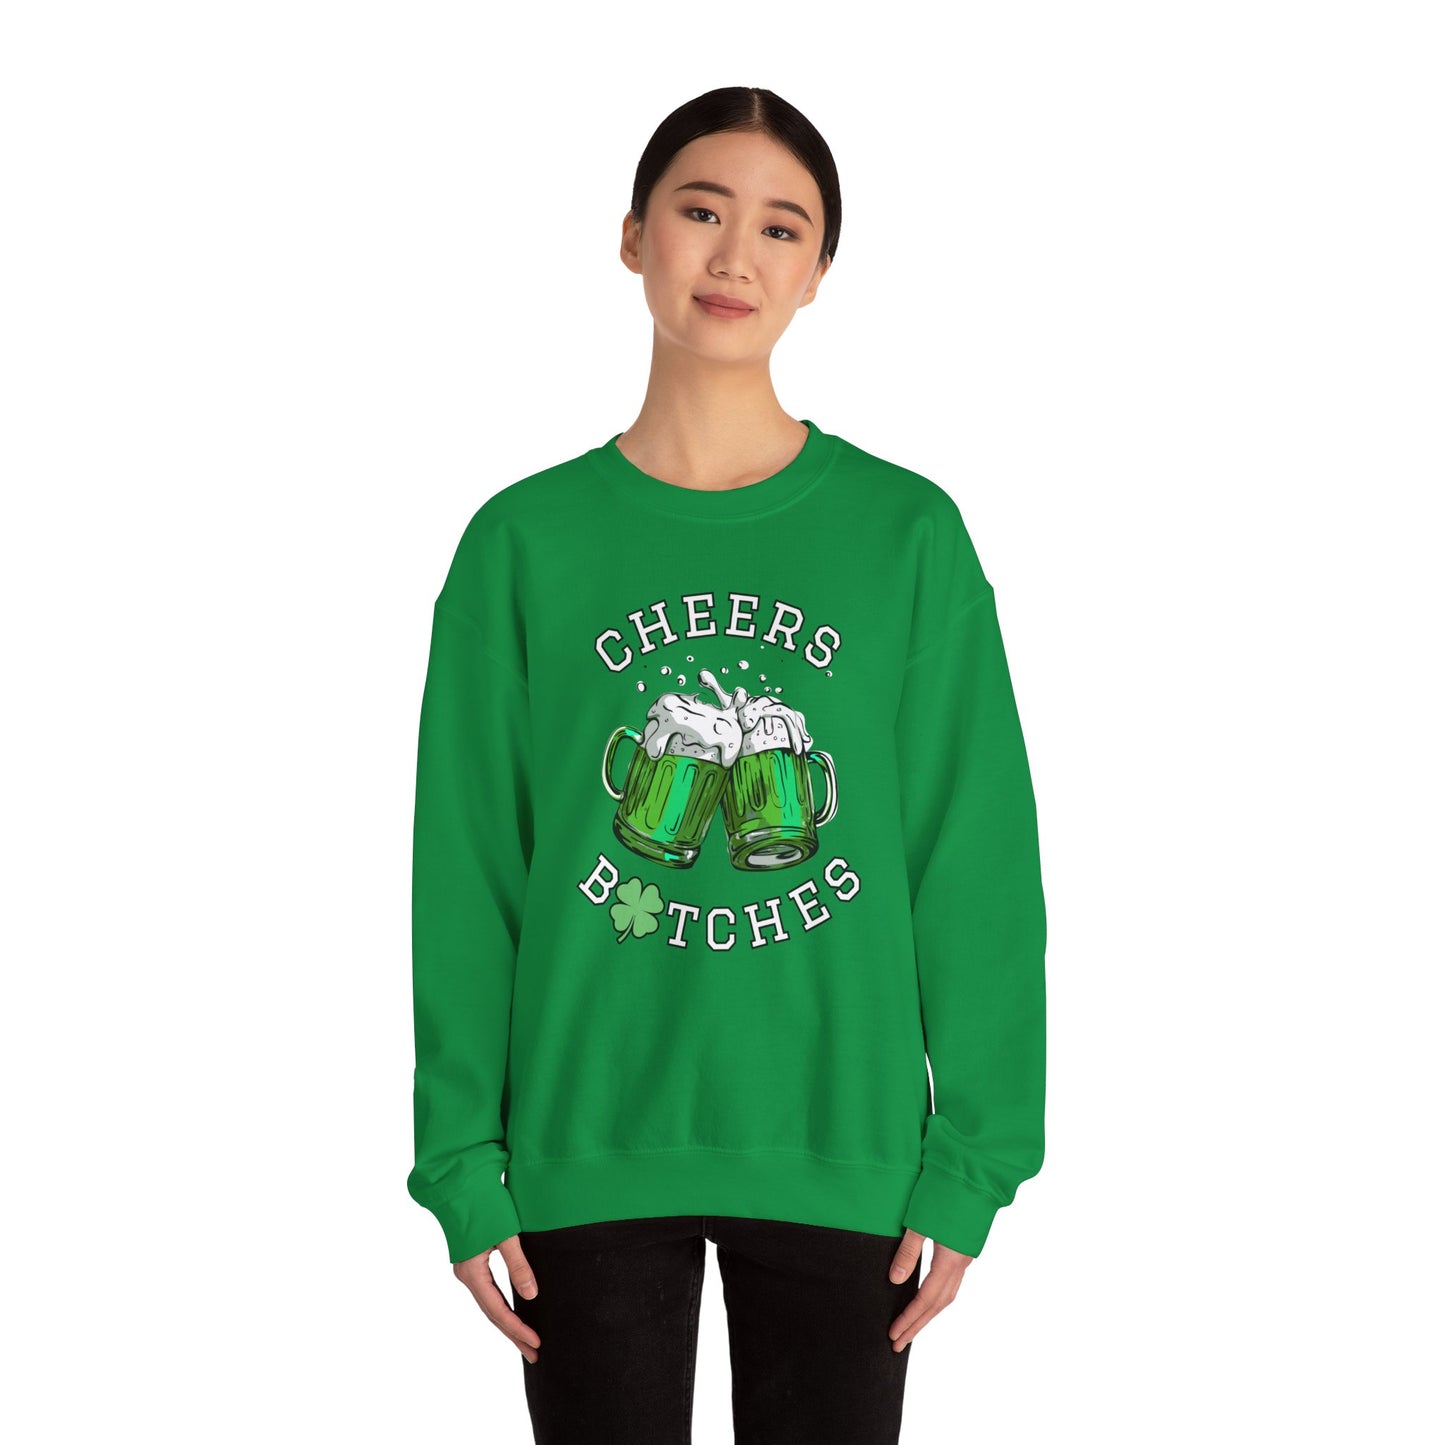 "Cheers B*tches" - HeavyBlend Unisex Crewneck Sweatshirt - St. Patrick's Day Sweatshirt